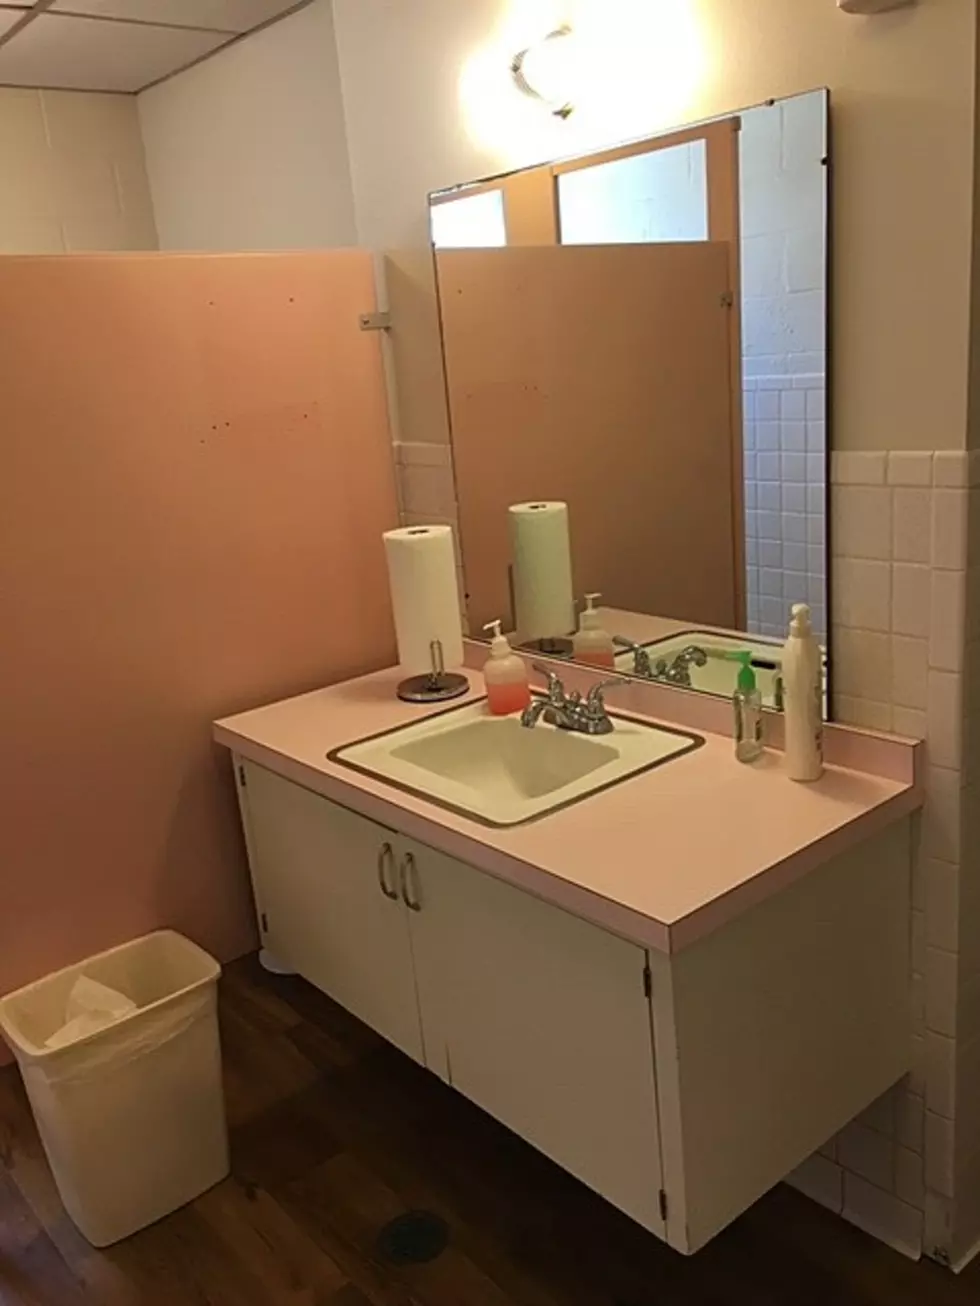 Restroom Renovation Revealed!  It’s Ah-mazzing! [SPONSORED]